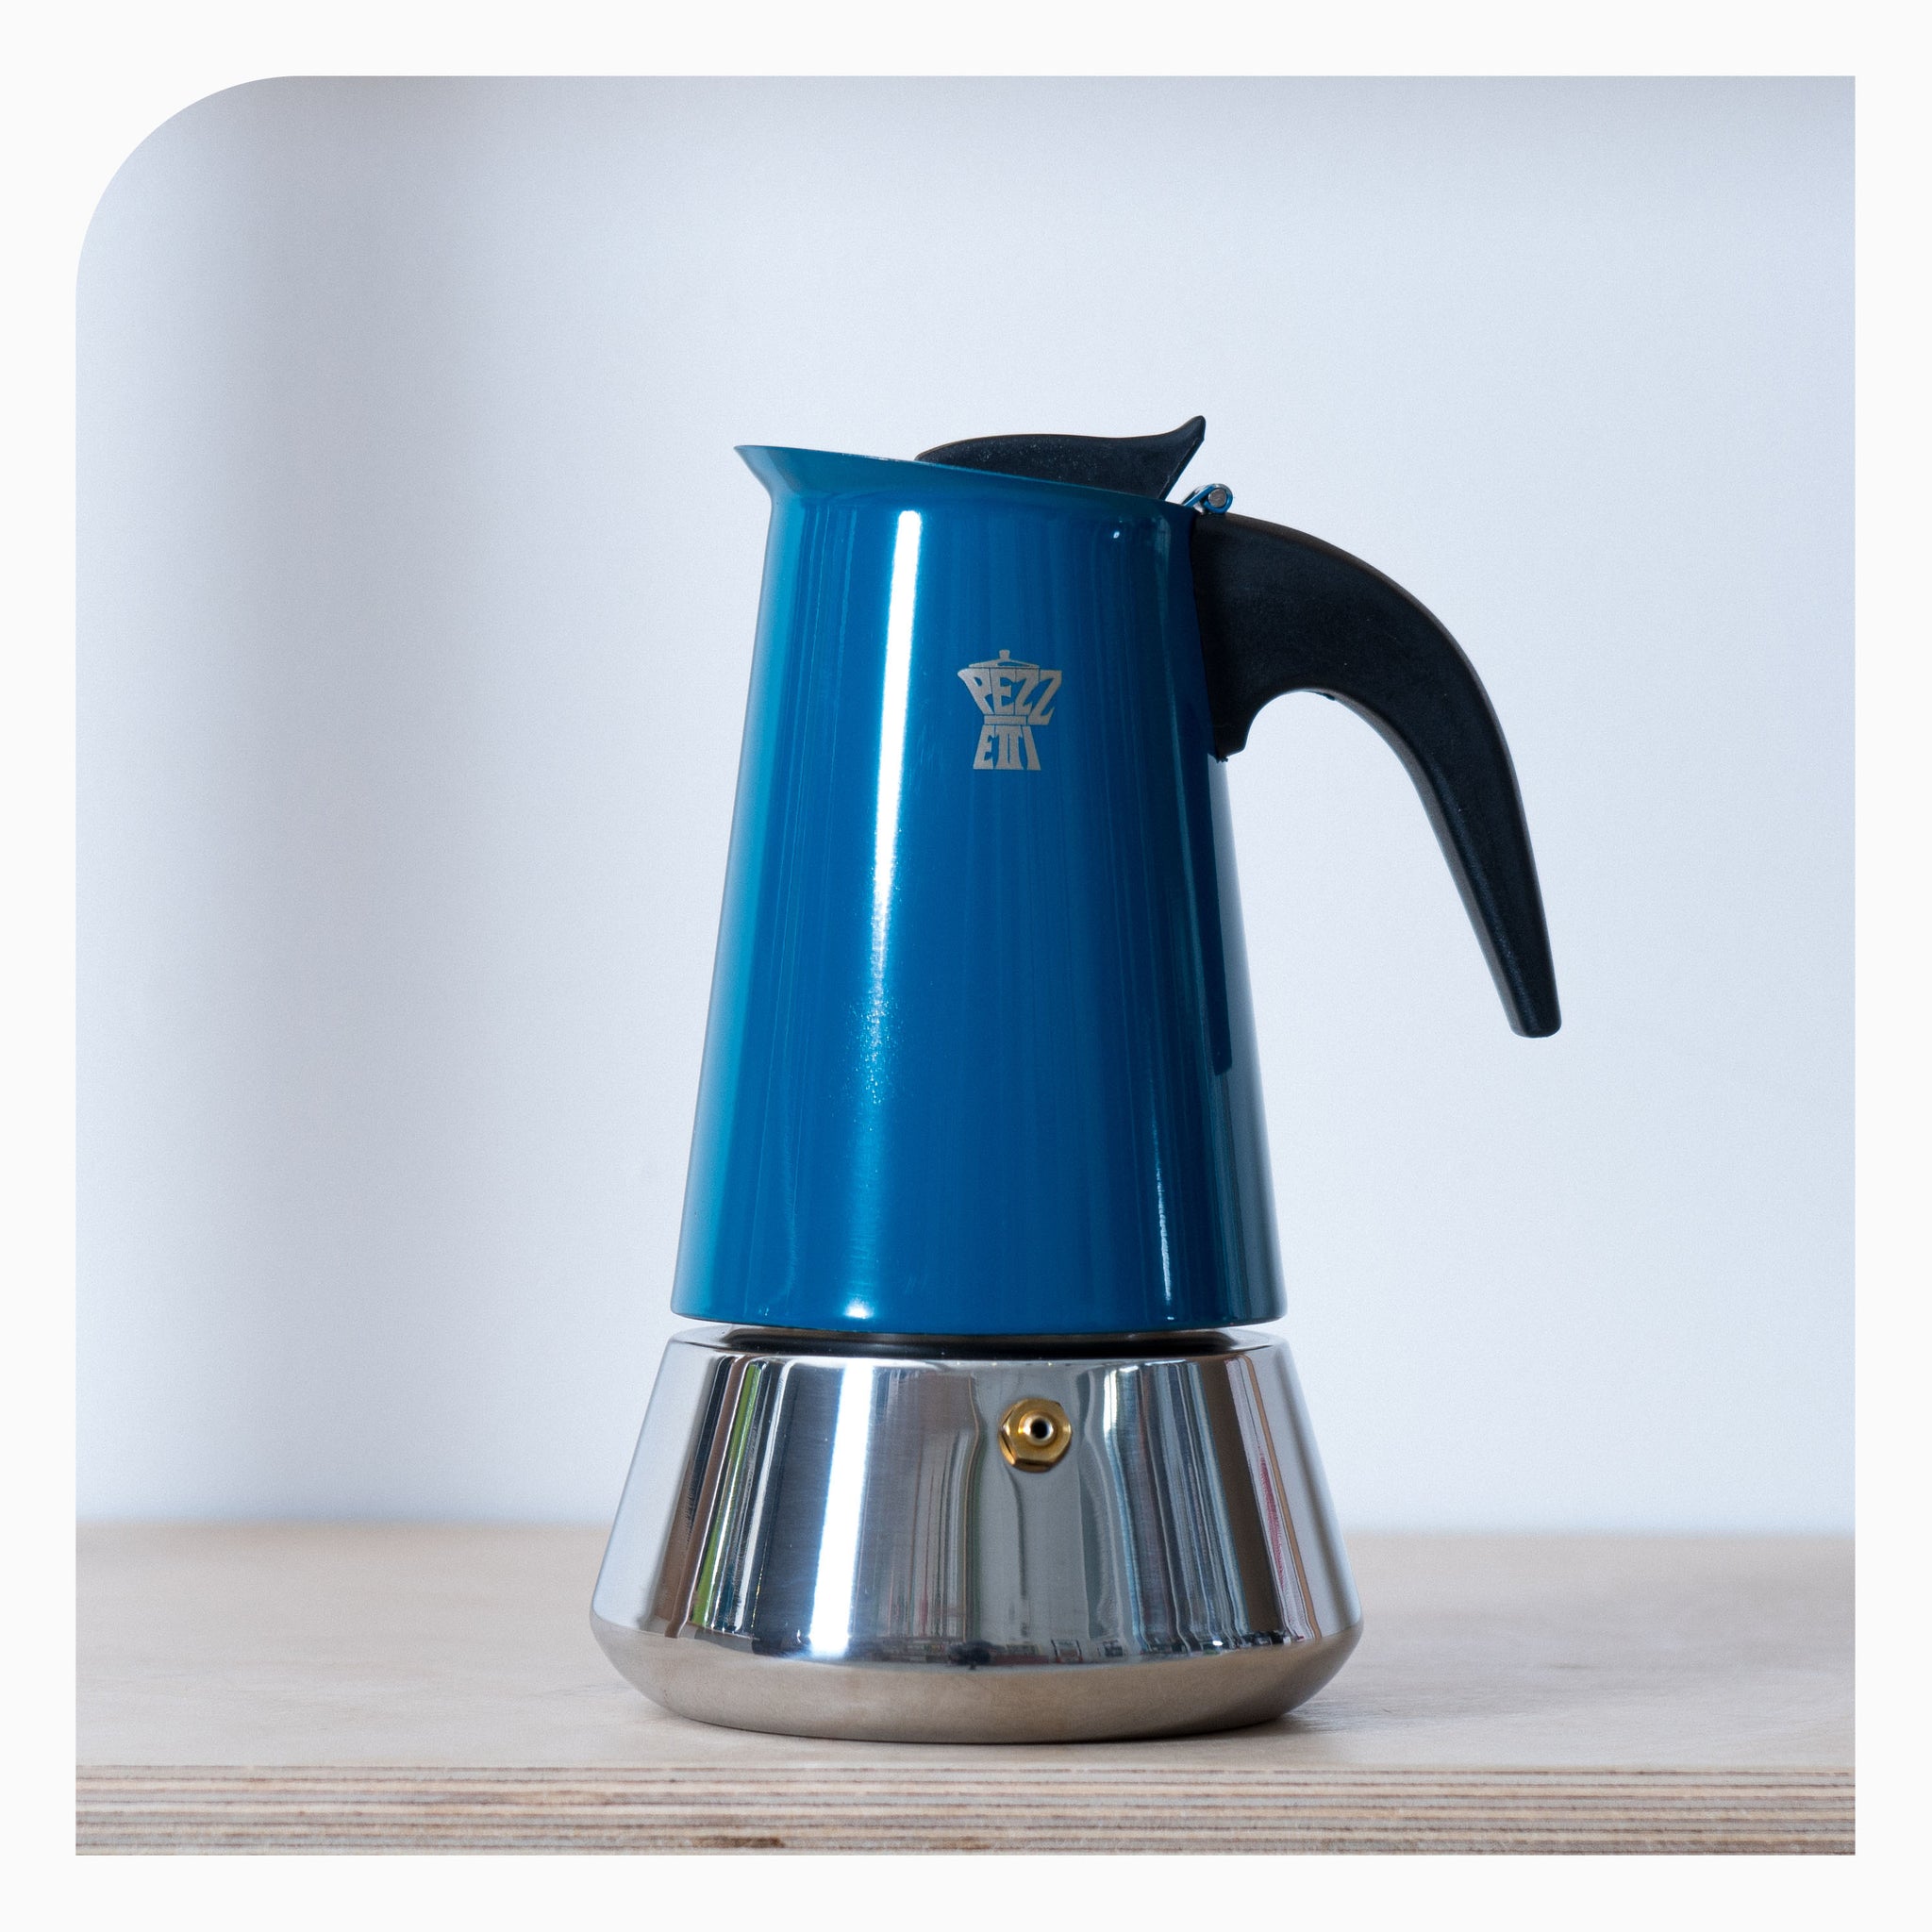 Pezzetti Steelexpress Coffee Brewer - 6 Cup - Teal Blue